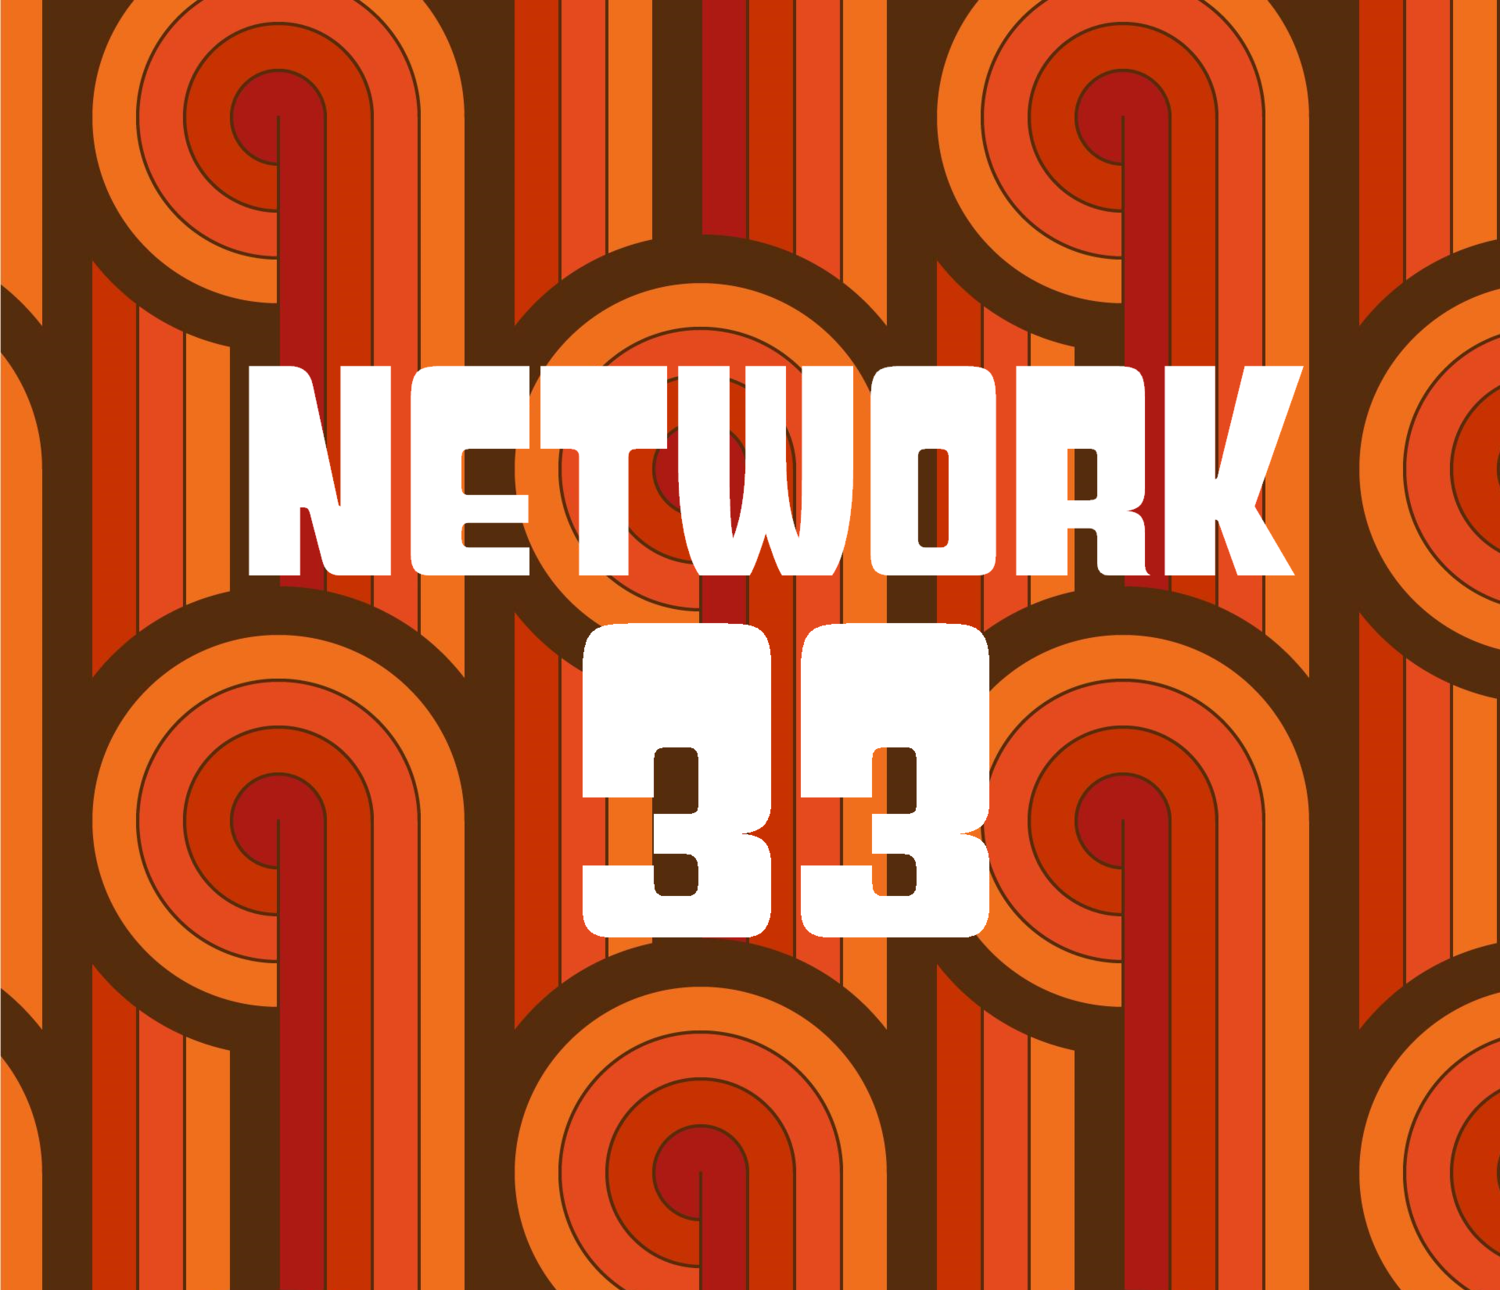 NETWORK 33